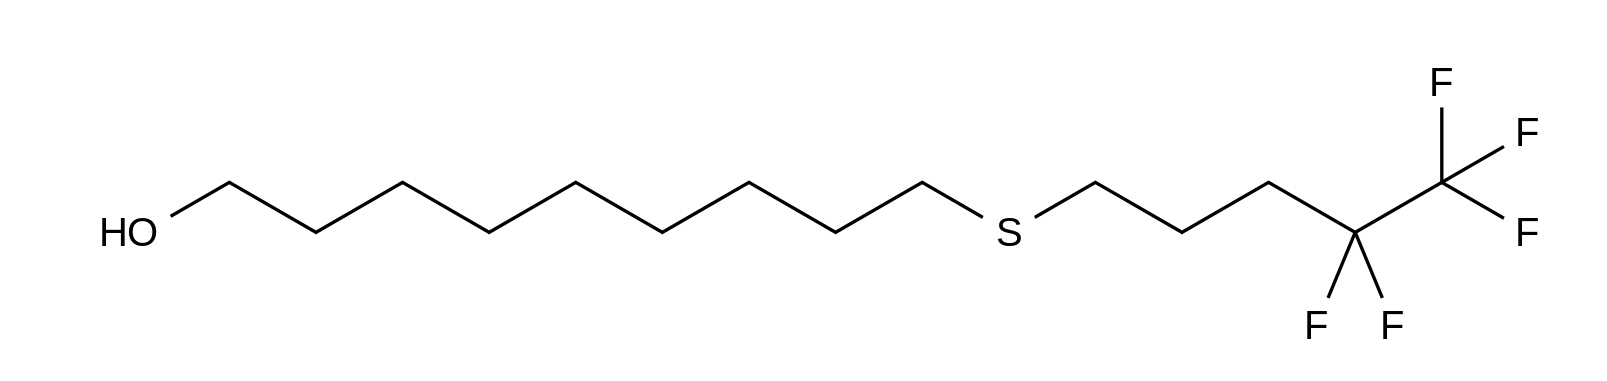 9-[(4,4,5,5,5-Pentafluoropentyl)thio]nonanol